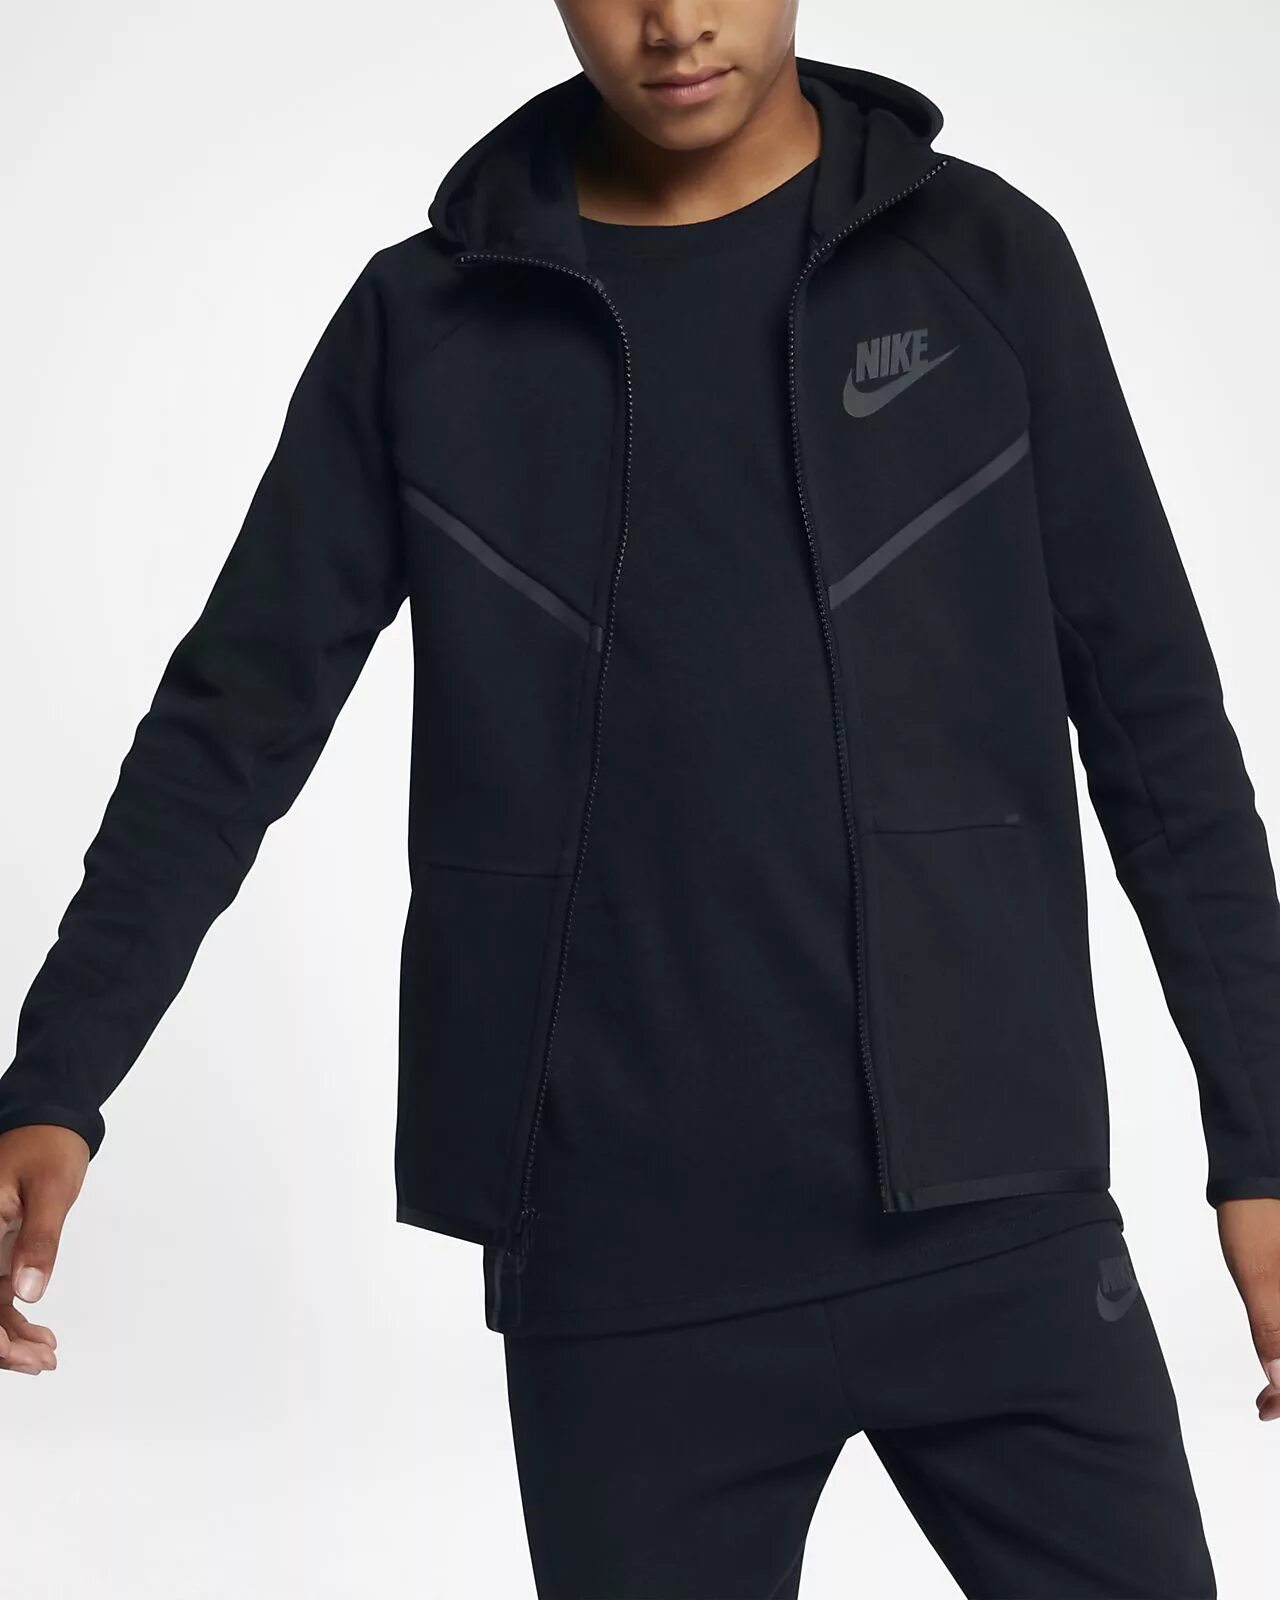 Nike Tech Fleece костюм. Nike Tech Fleece костюм черный. Nike Sportswear Tech Fleece Black. Nike Fleece Tech мужской черный.